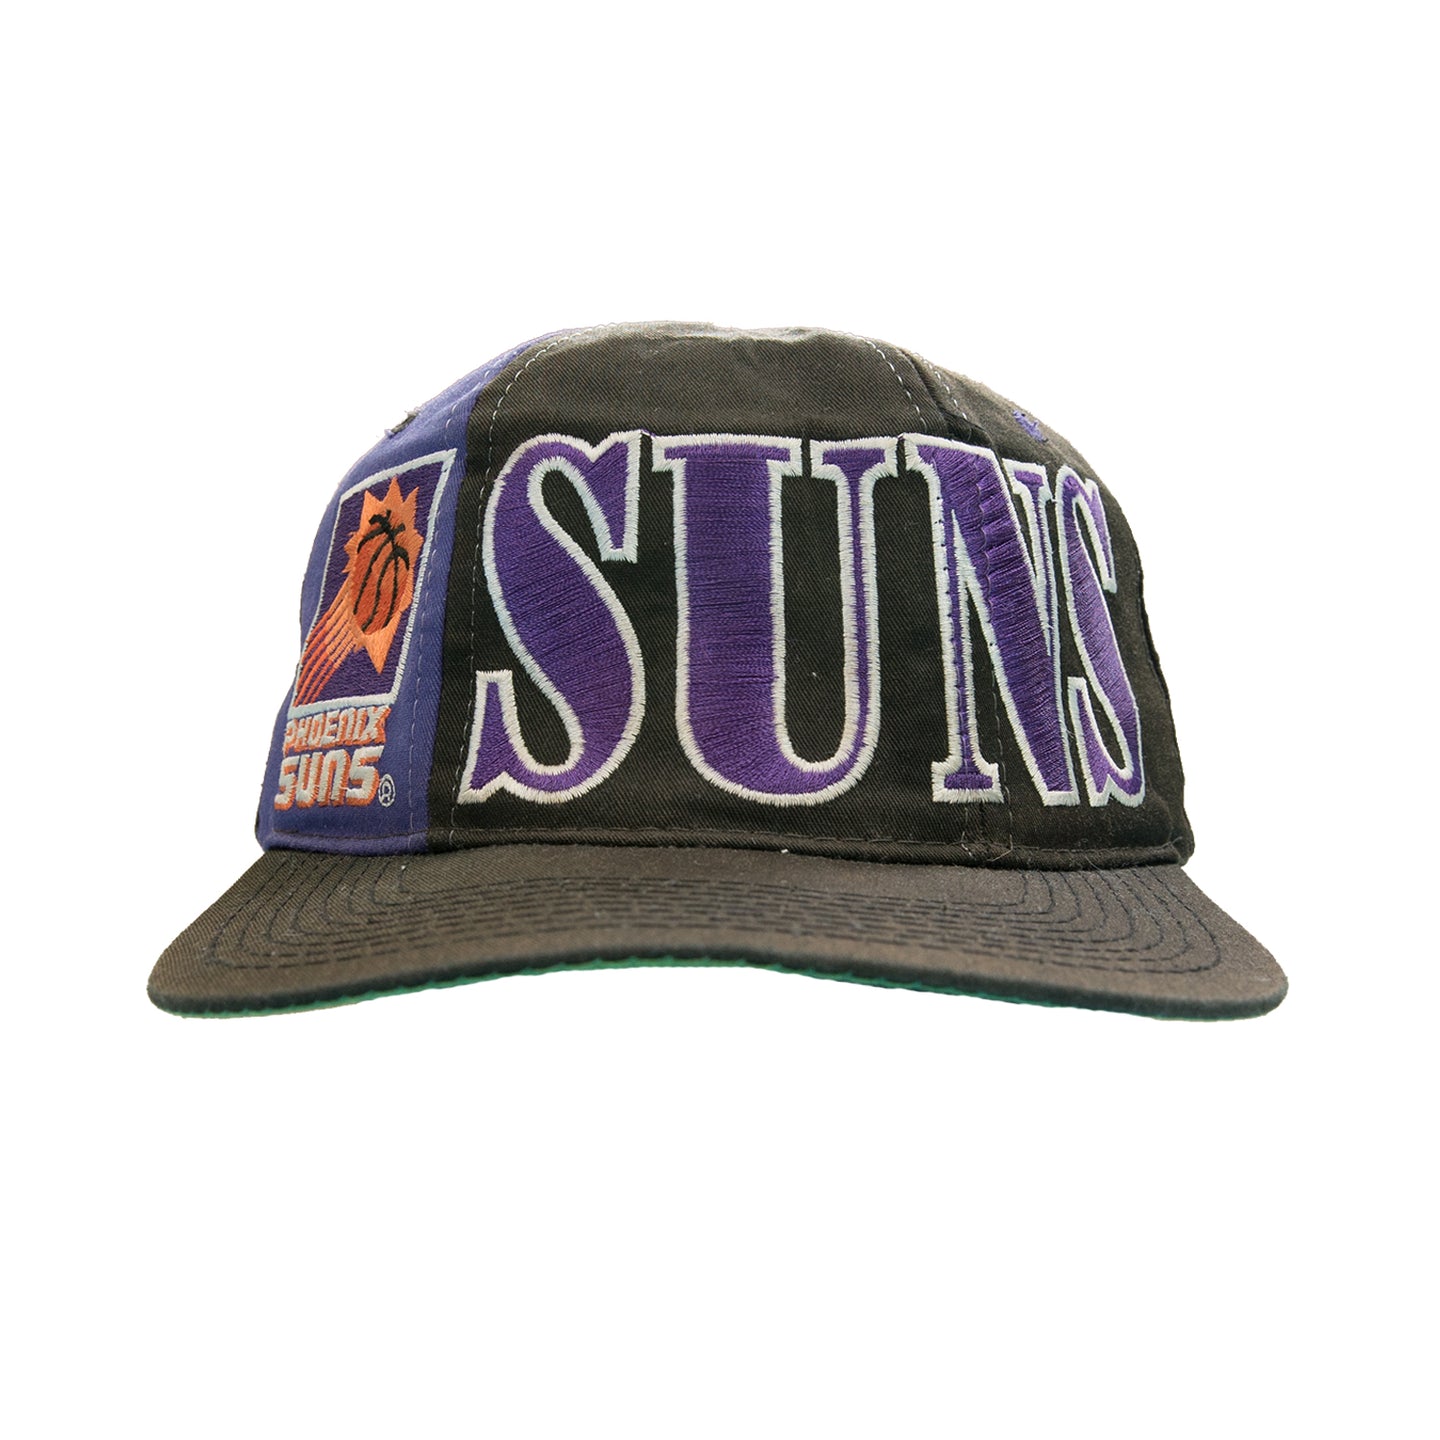 Vintage Starter Phoenix Suns NBA snapback